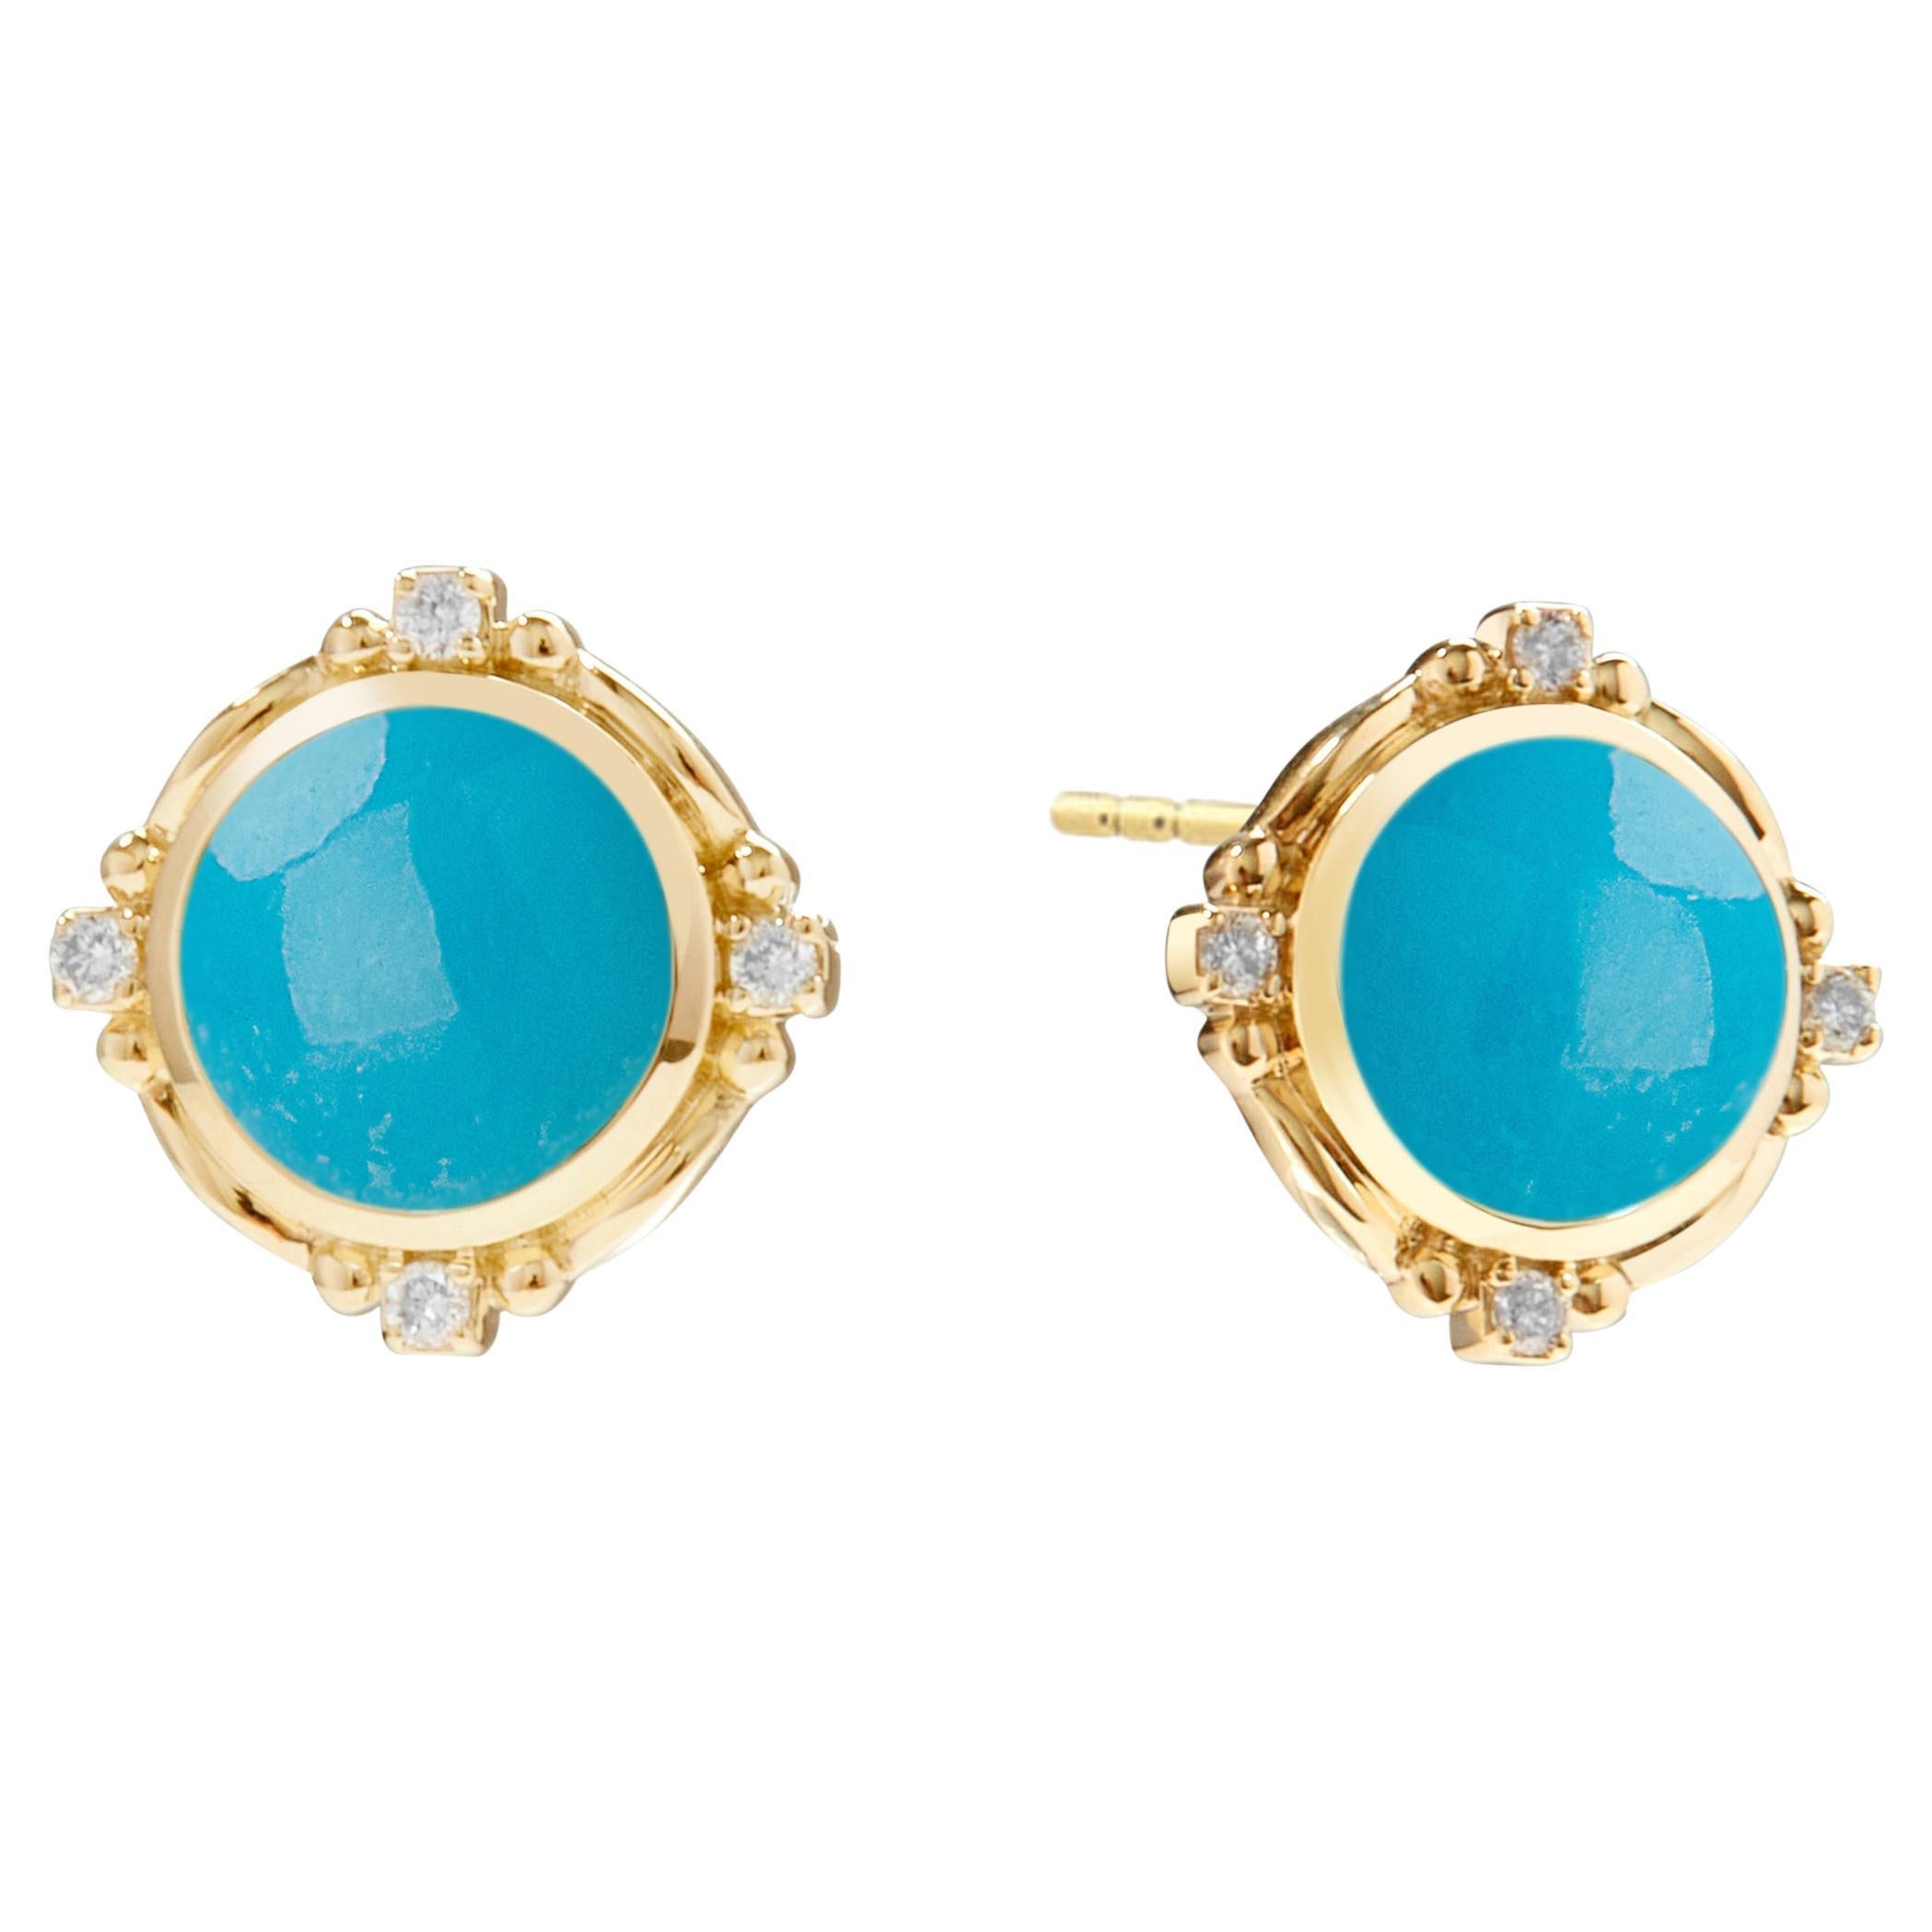 Syna Yellow Gold Sleeping Beauty Turquoise Earrings with Diamonds